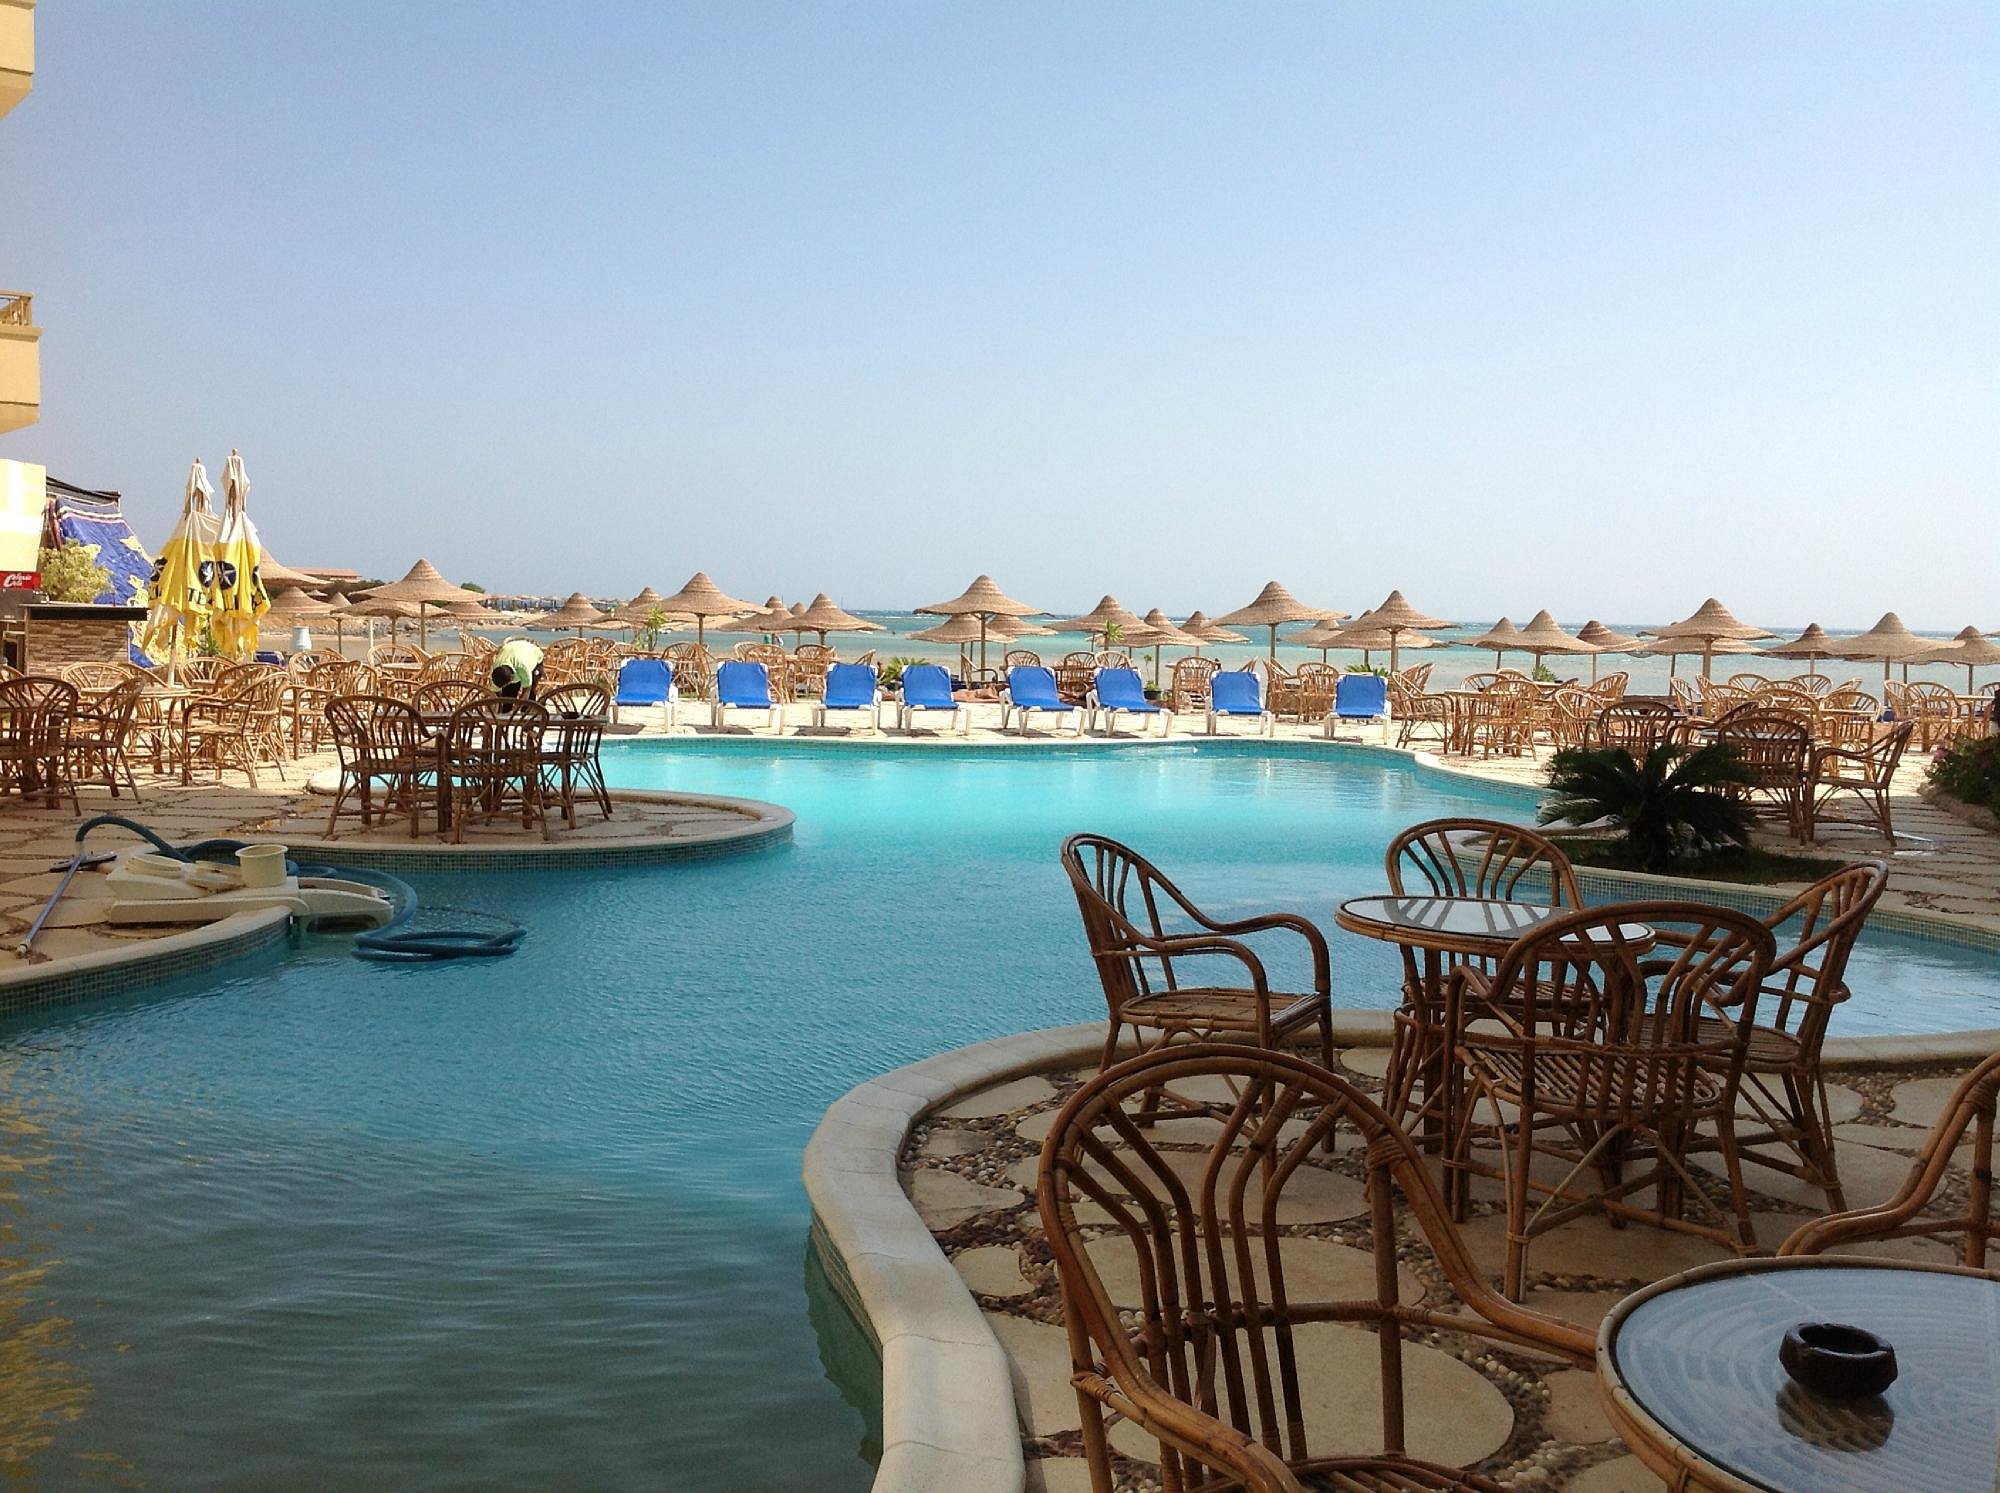 Magic хургада. Magic Beach Resort 4 Хургада. Magic Beach Hotel 4 Египет. Отель Мэджик Бич Хургада 5 звезд. Пляж Хургада Примавера отель.